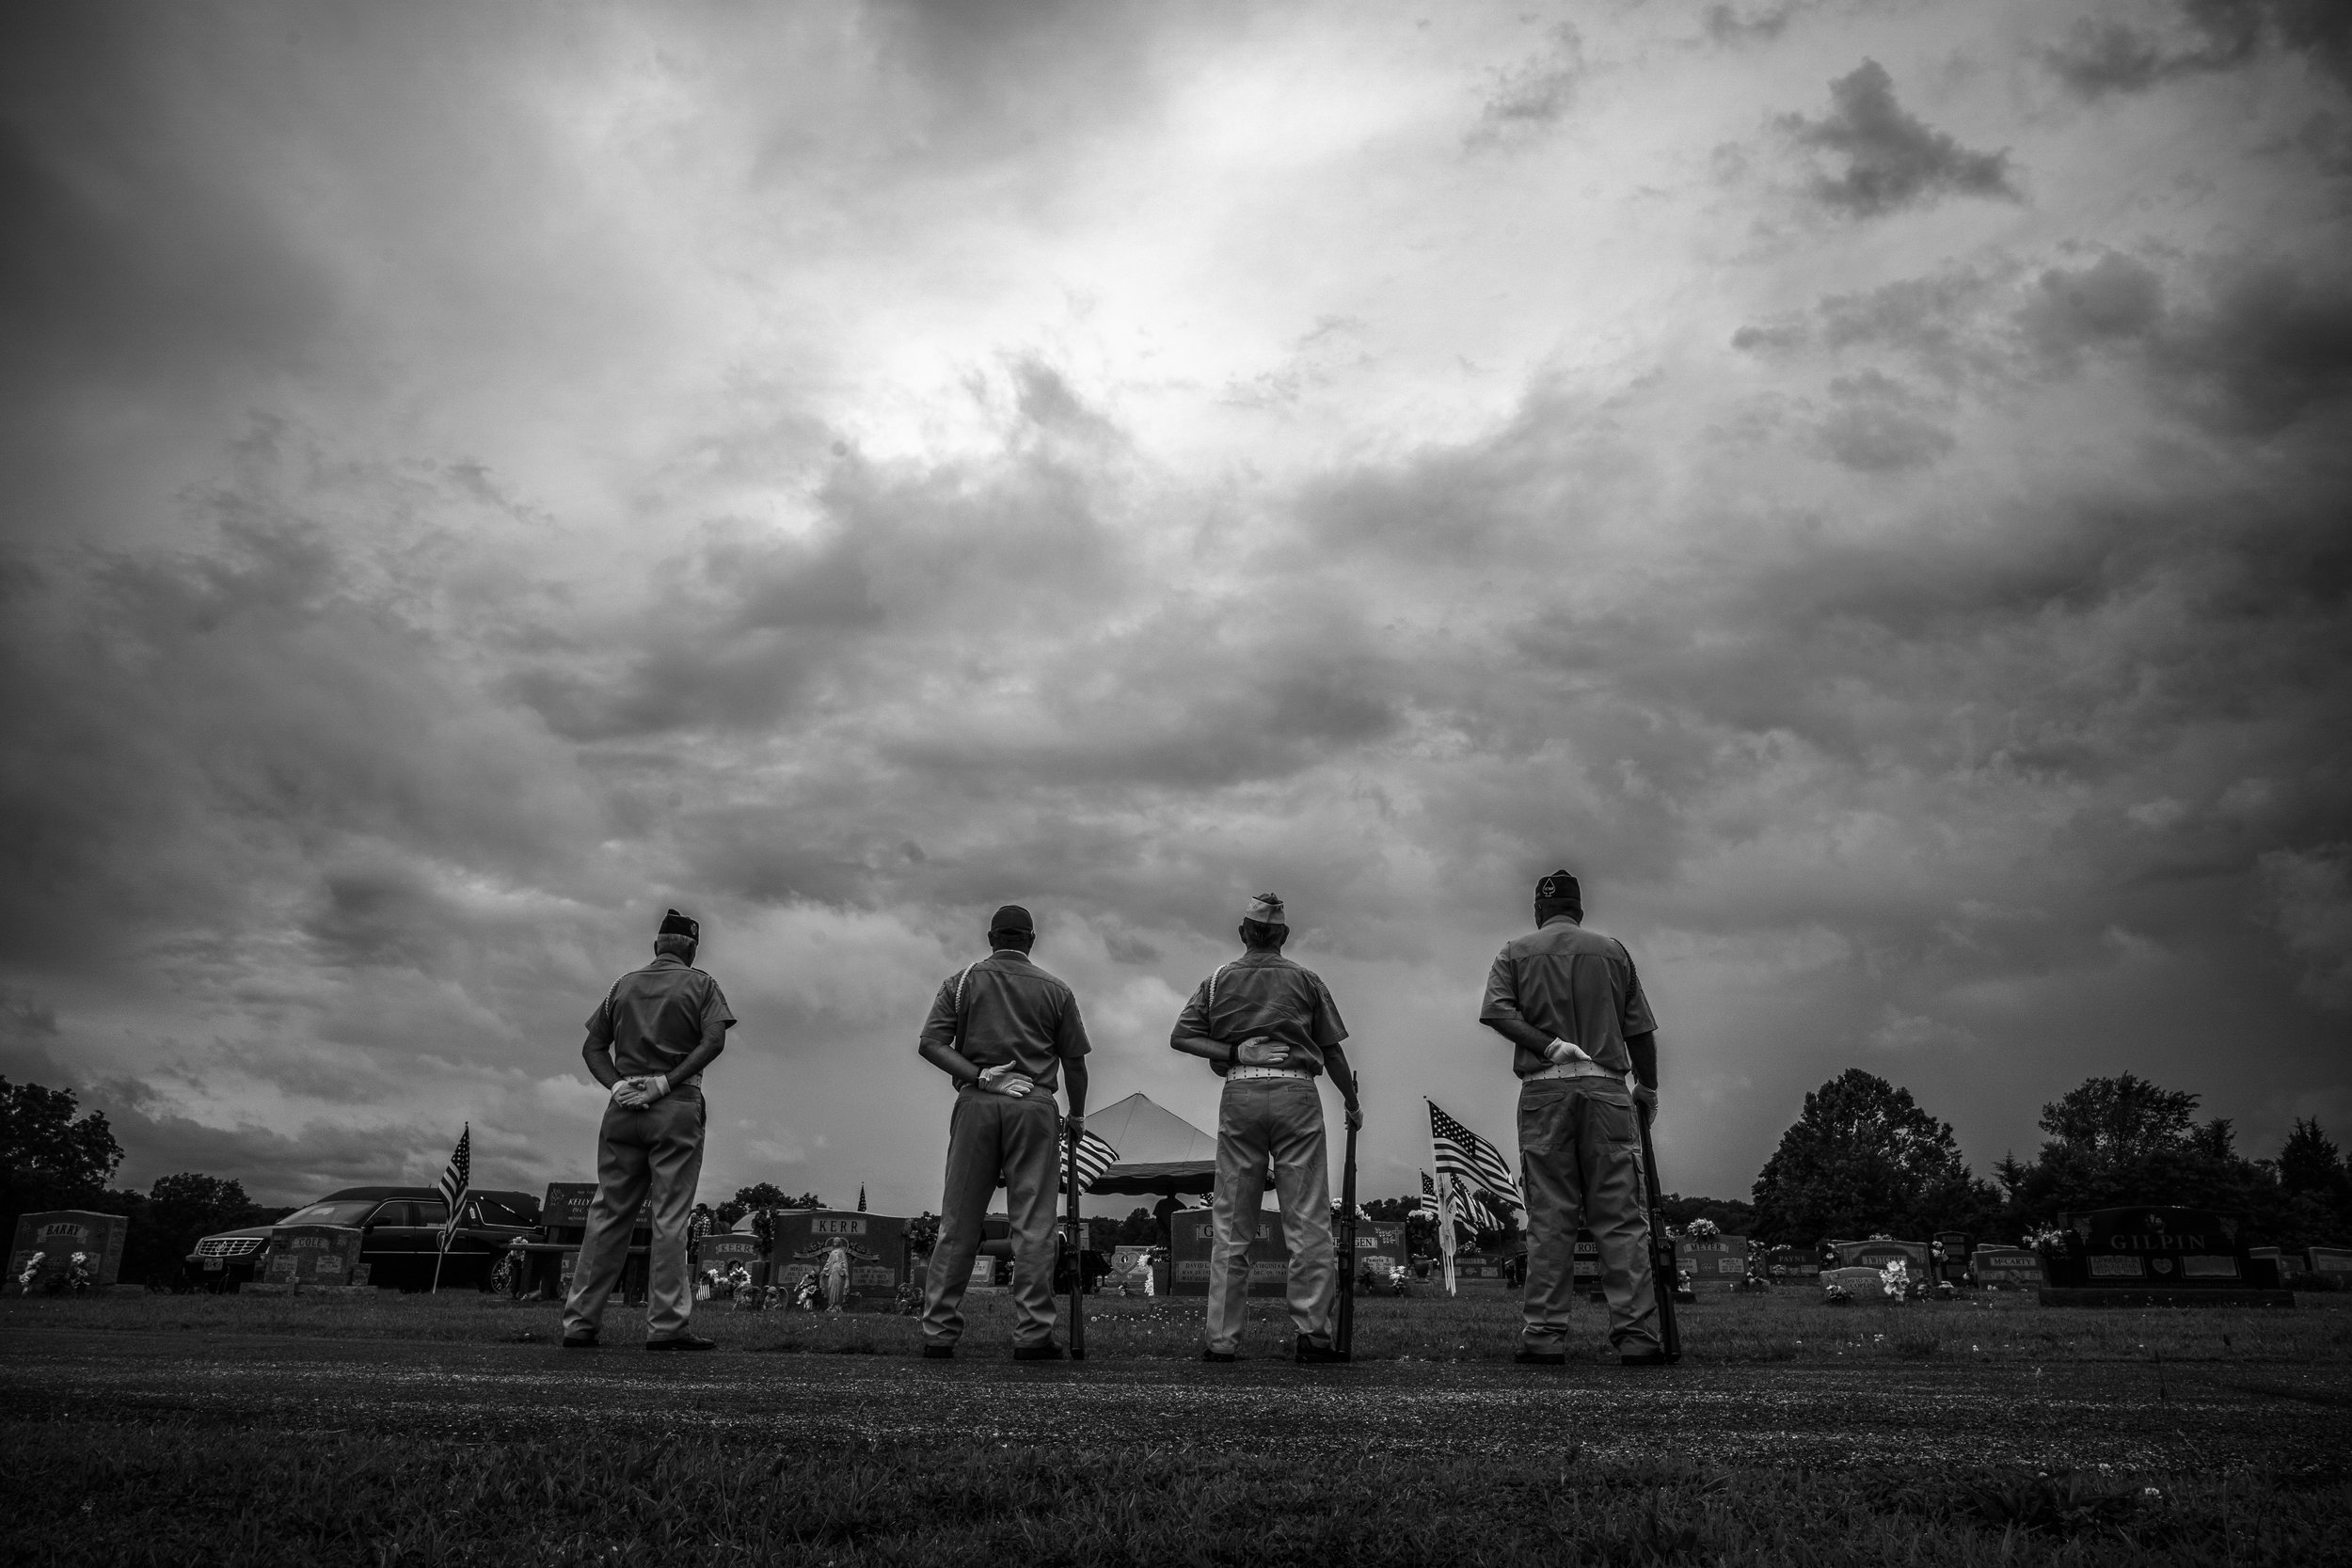  VFW 2442 Honor Guards wait before firing their 3 shot salute during a Vietnam veteran's funeral in central Missouri on Wednesday, Jun. 19, 2019. 